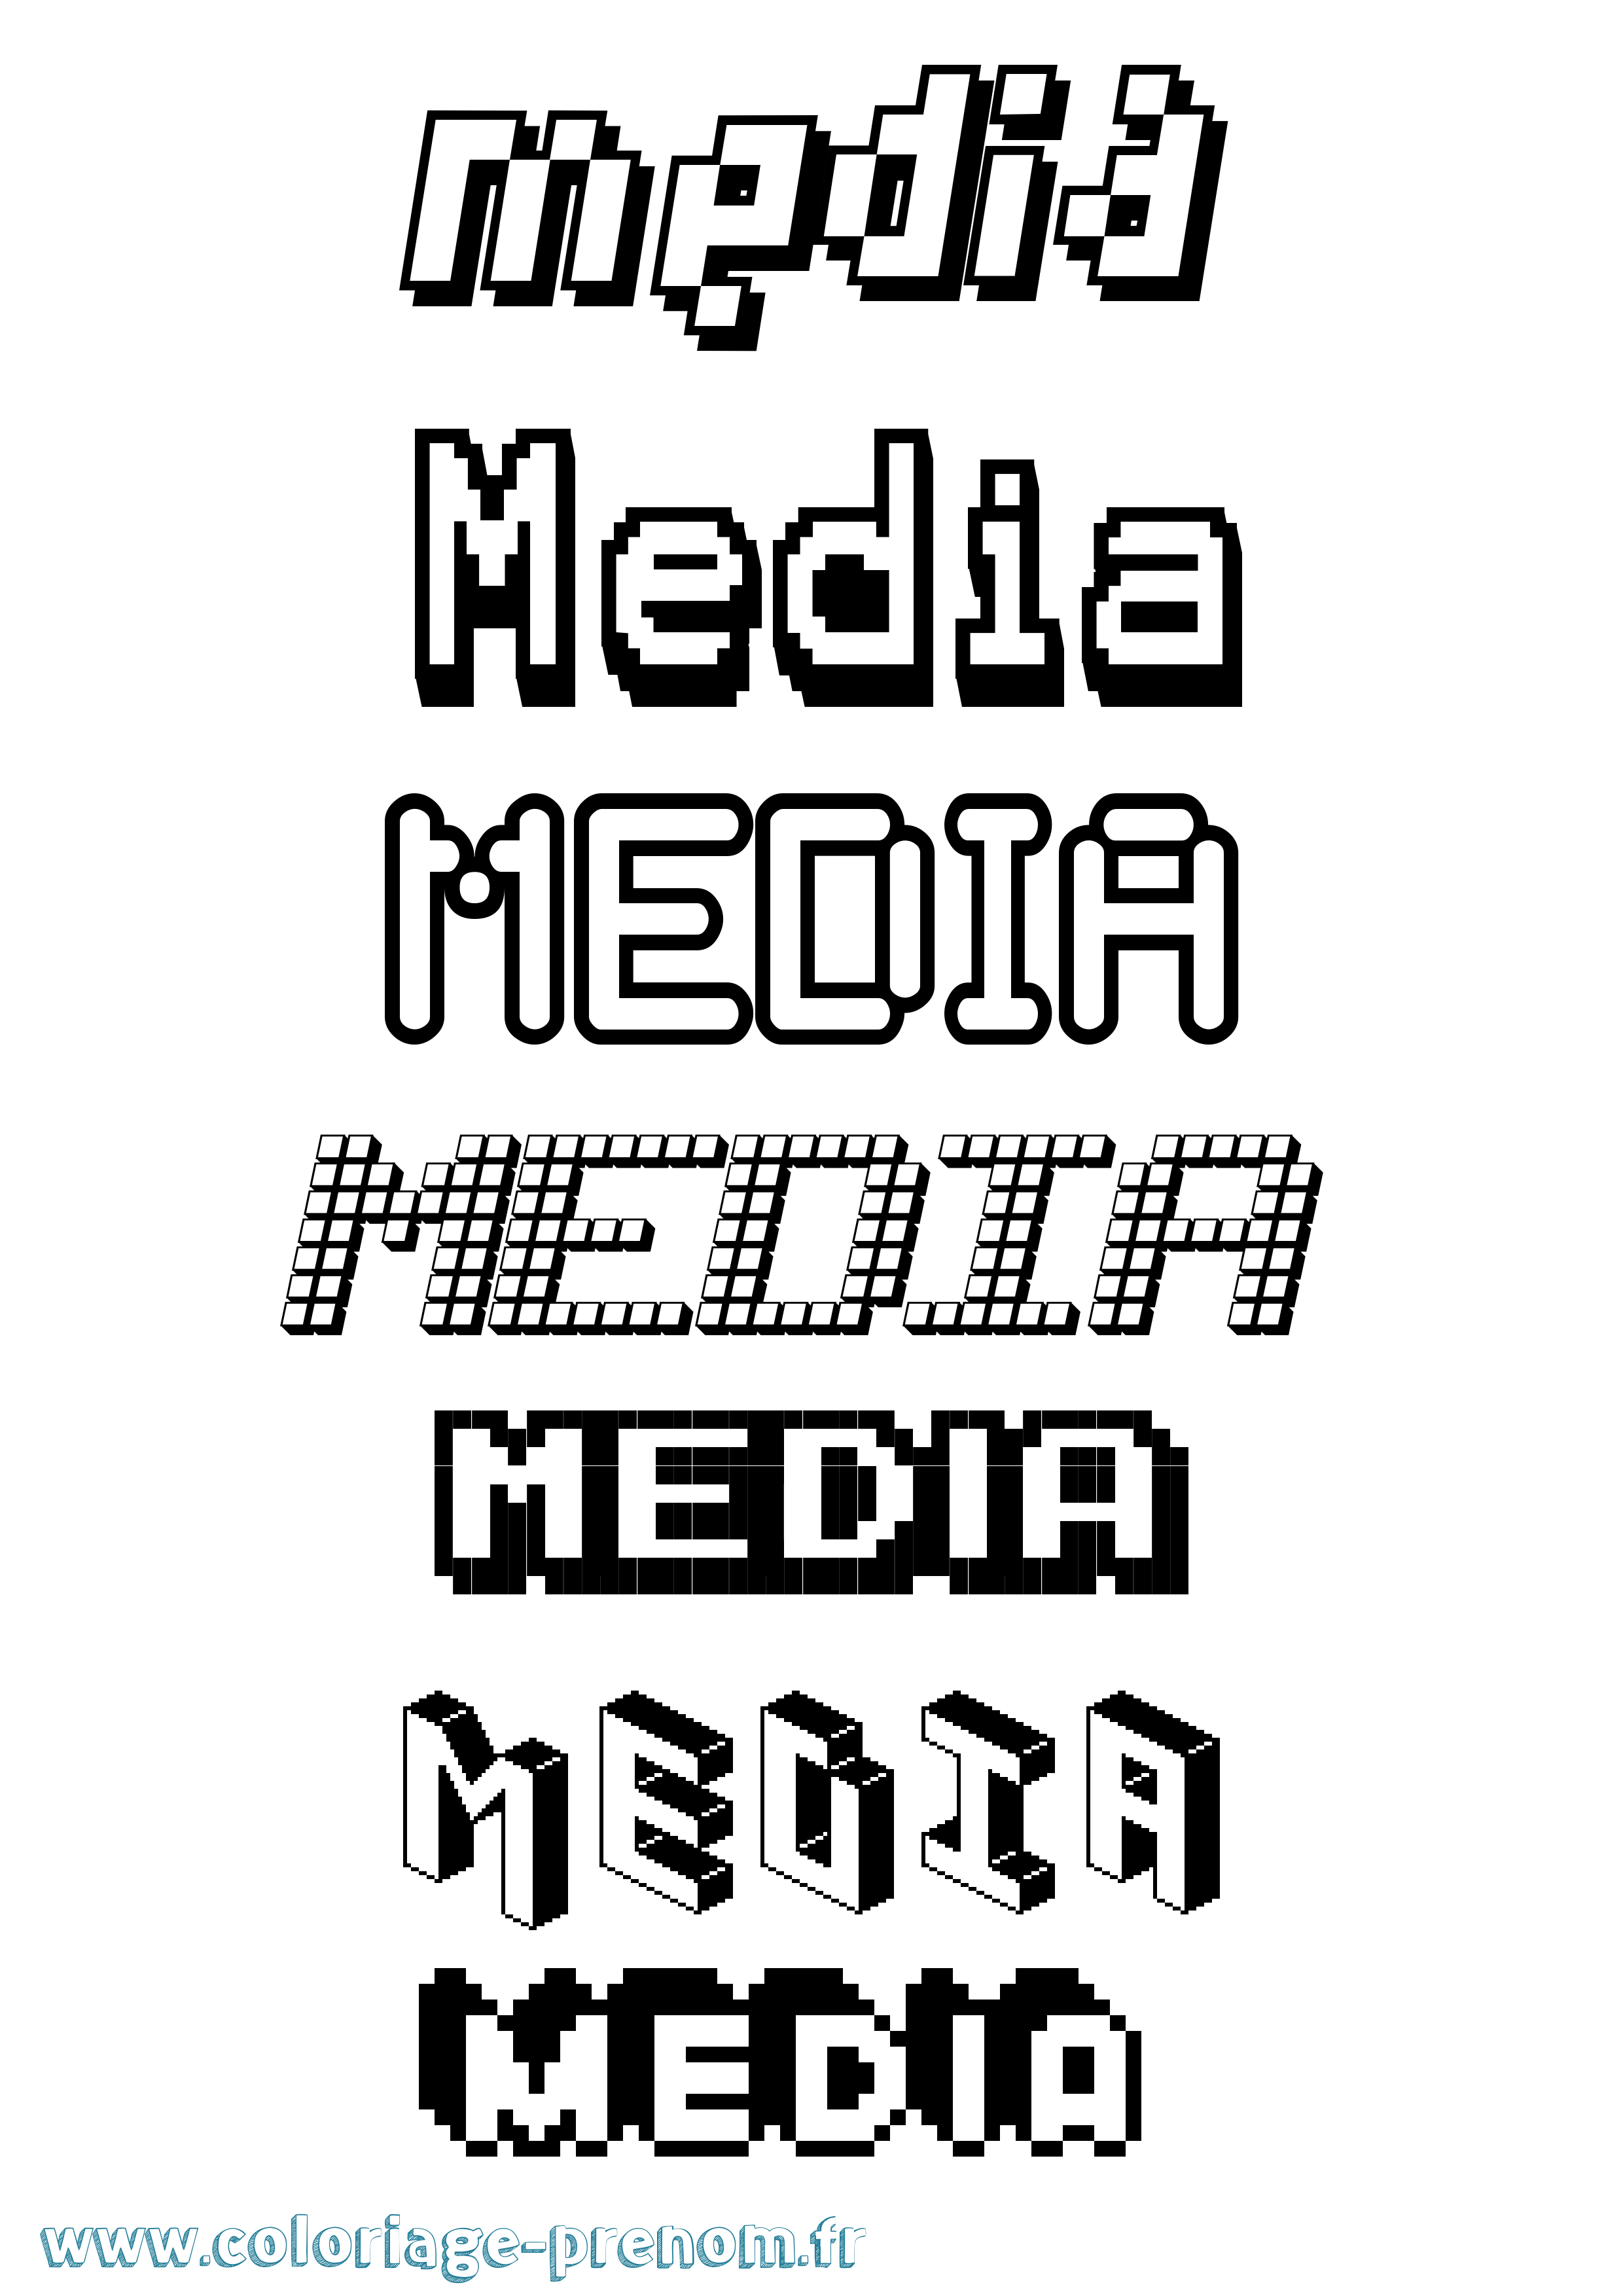 Coloriage prénom Media Pixel